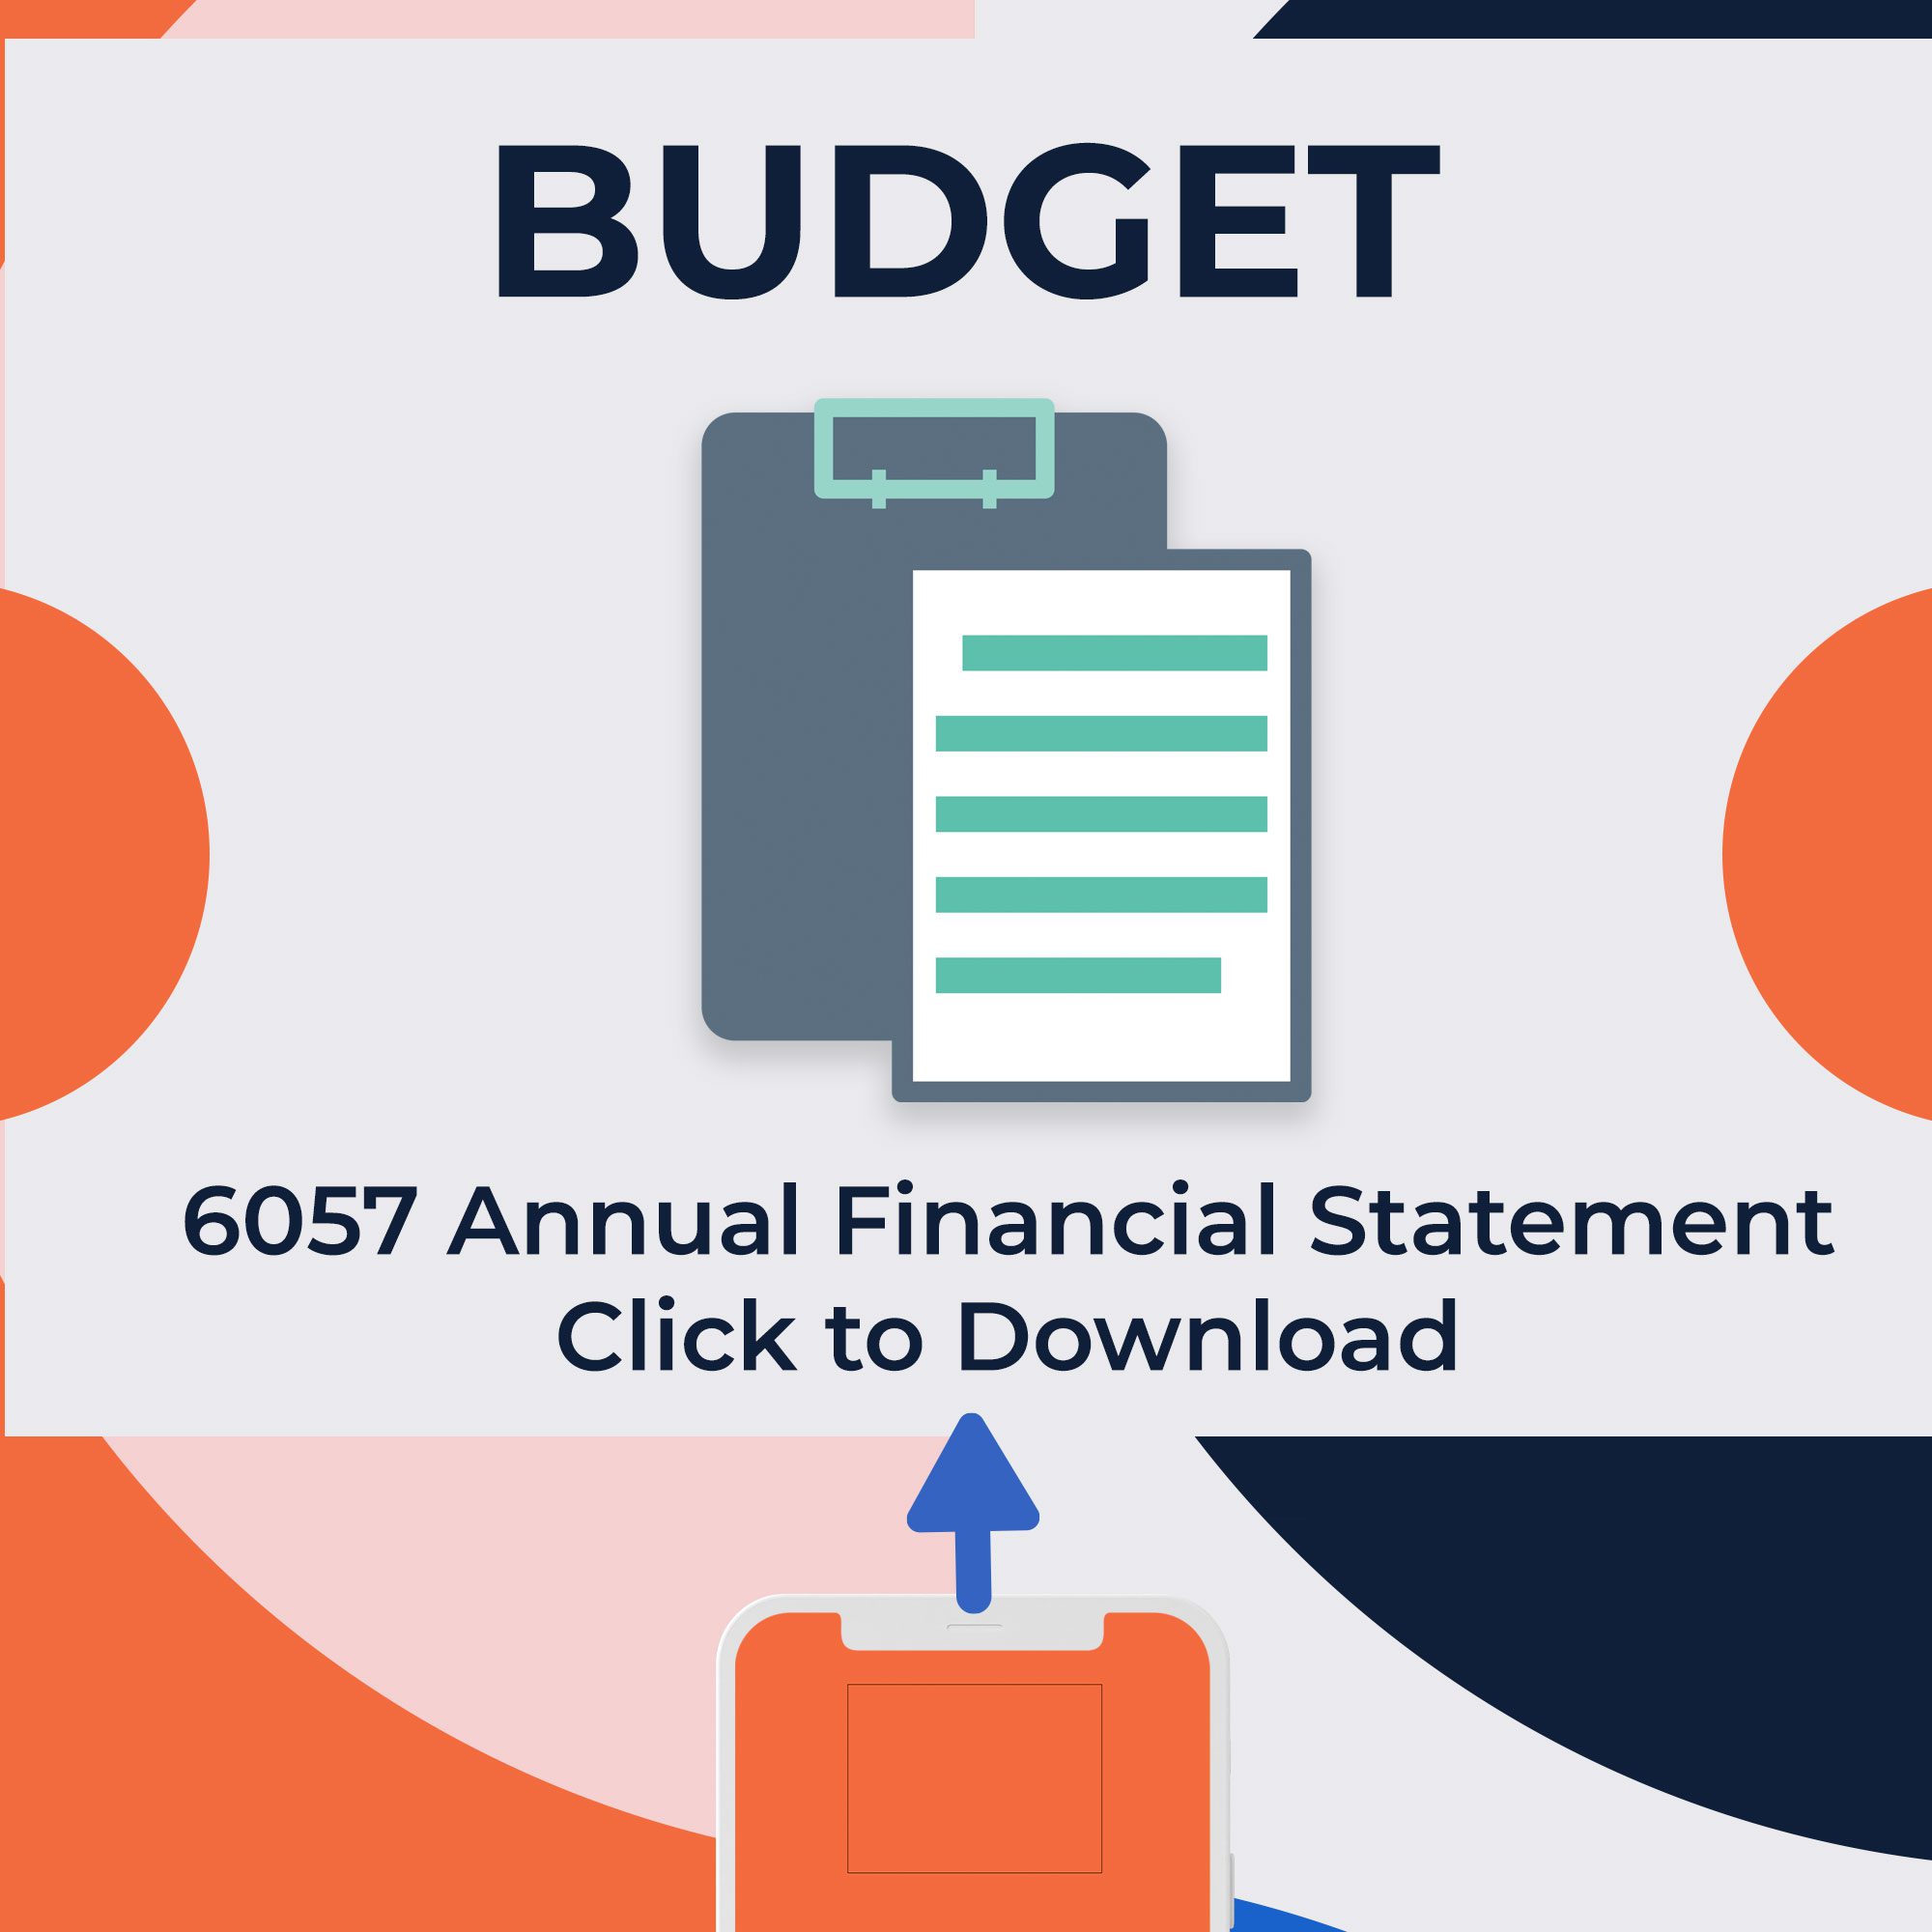 6057 Annual Financial Statement